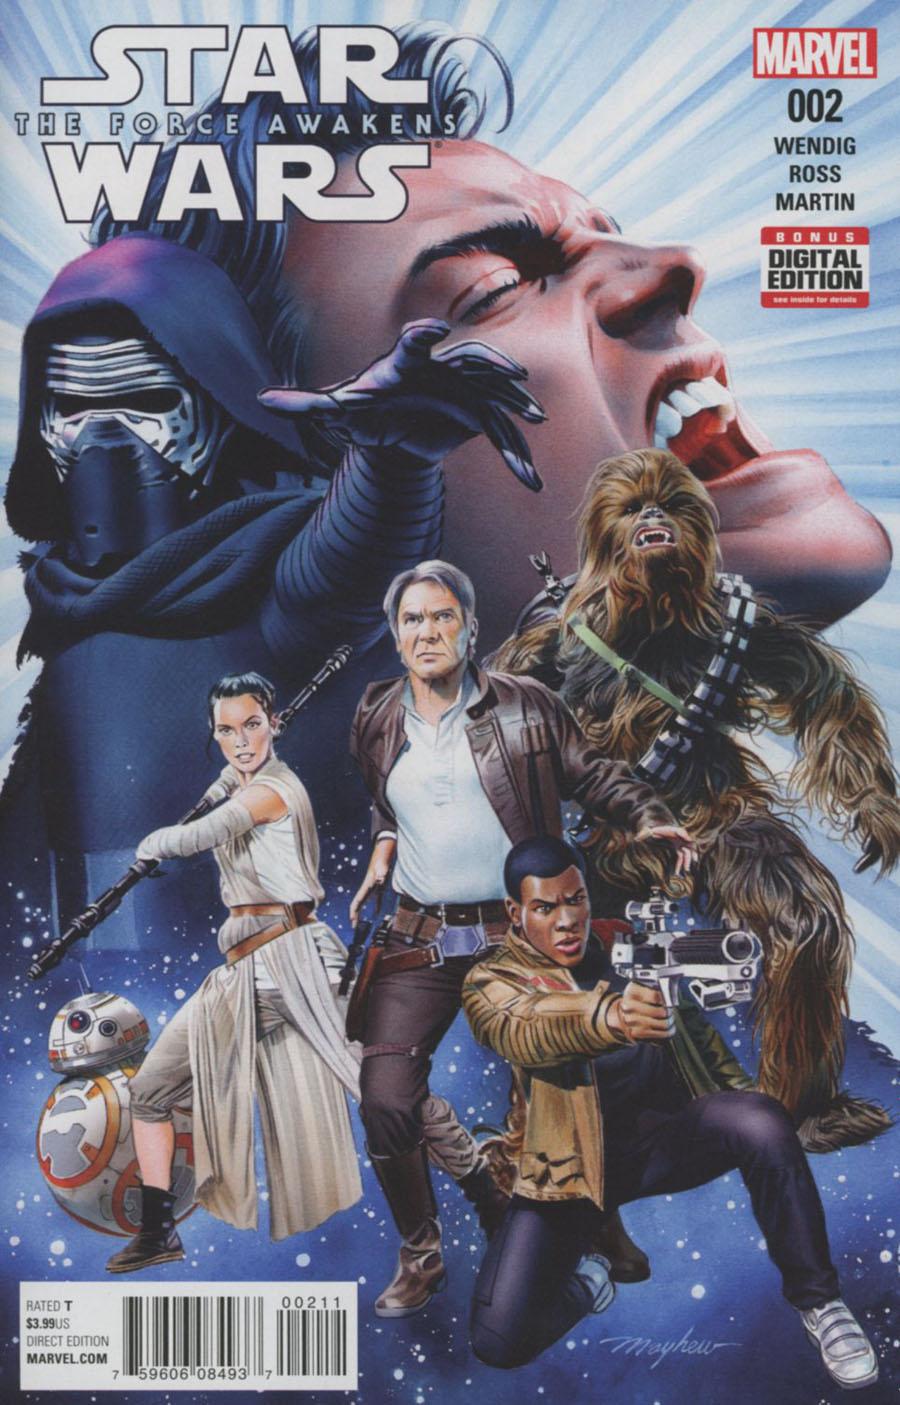 Star Wars Episode VII The Force Awakens Adaptation Vol. 1 #2